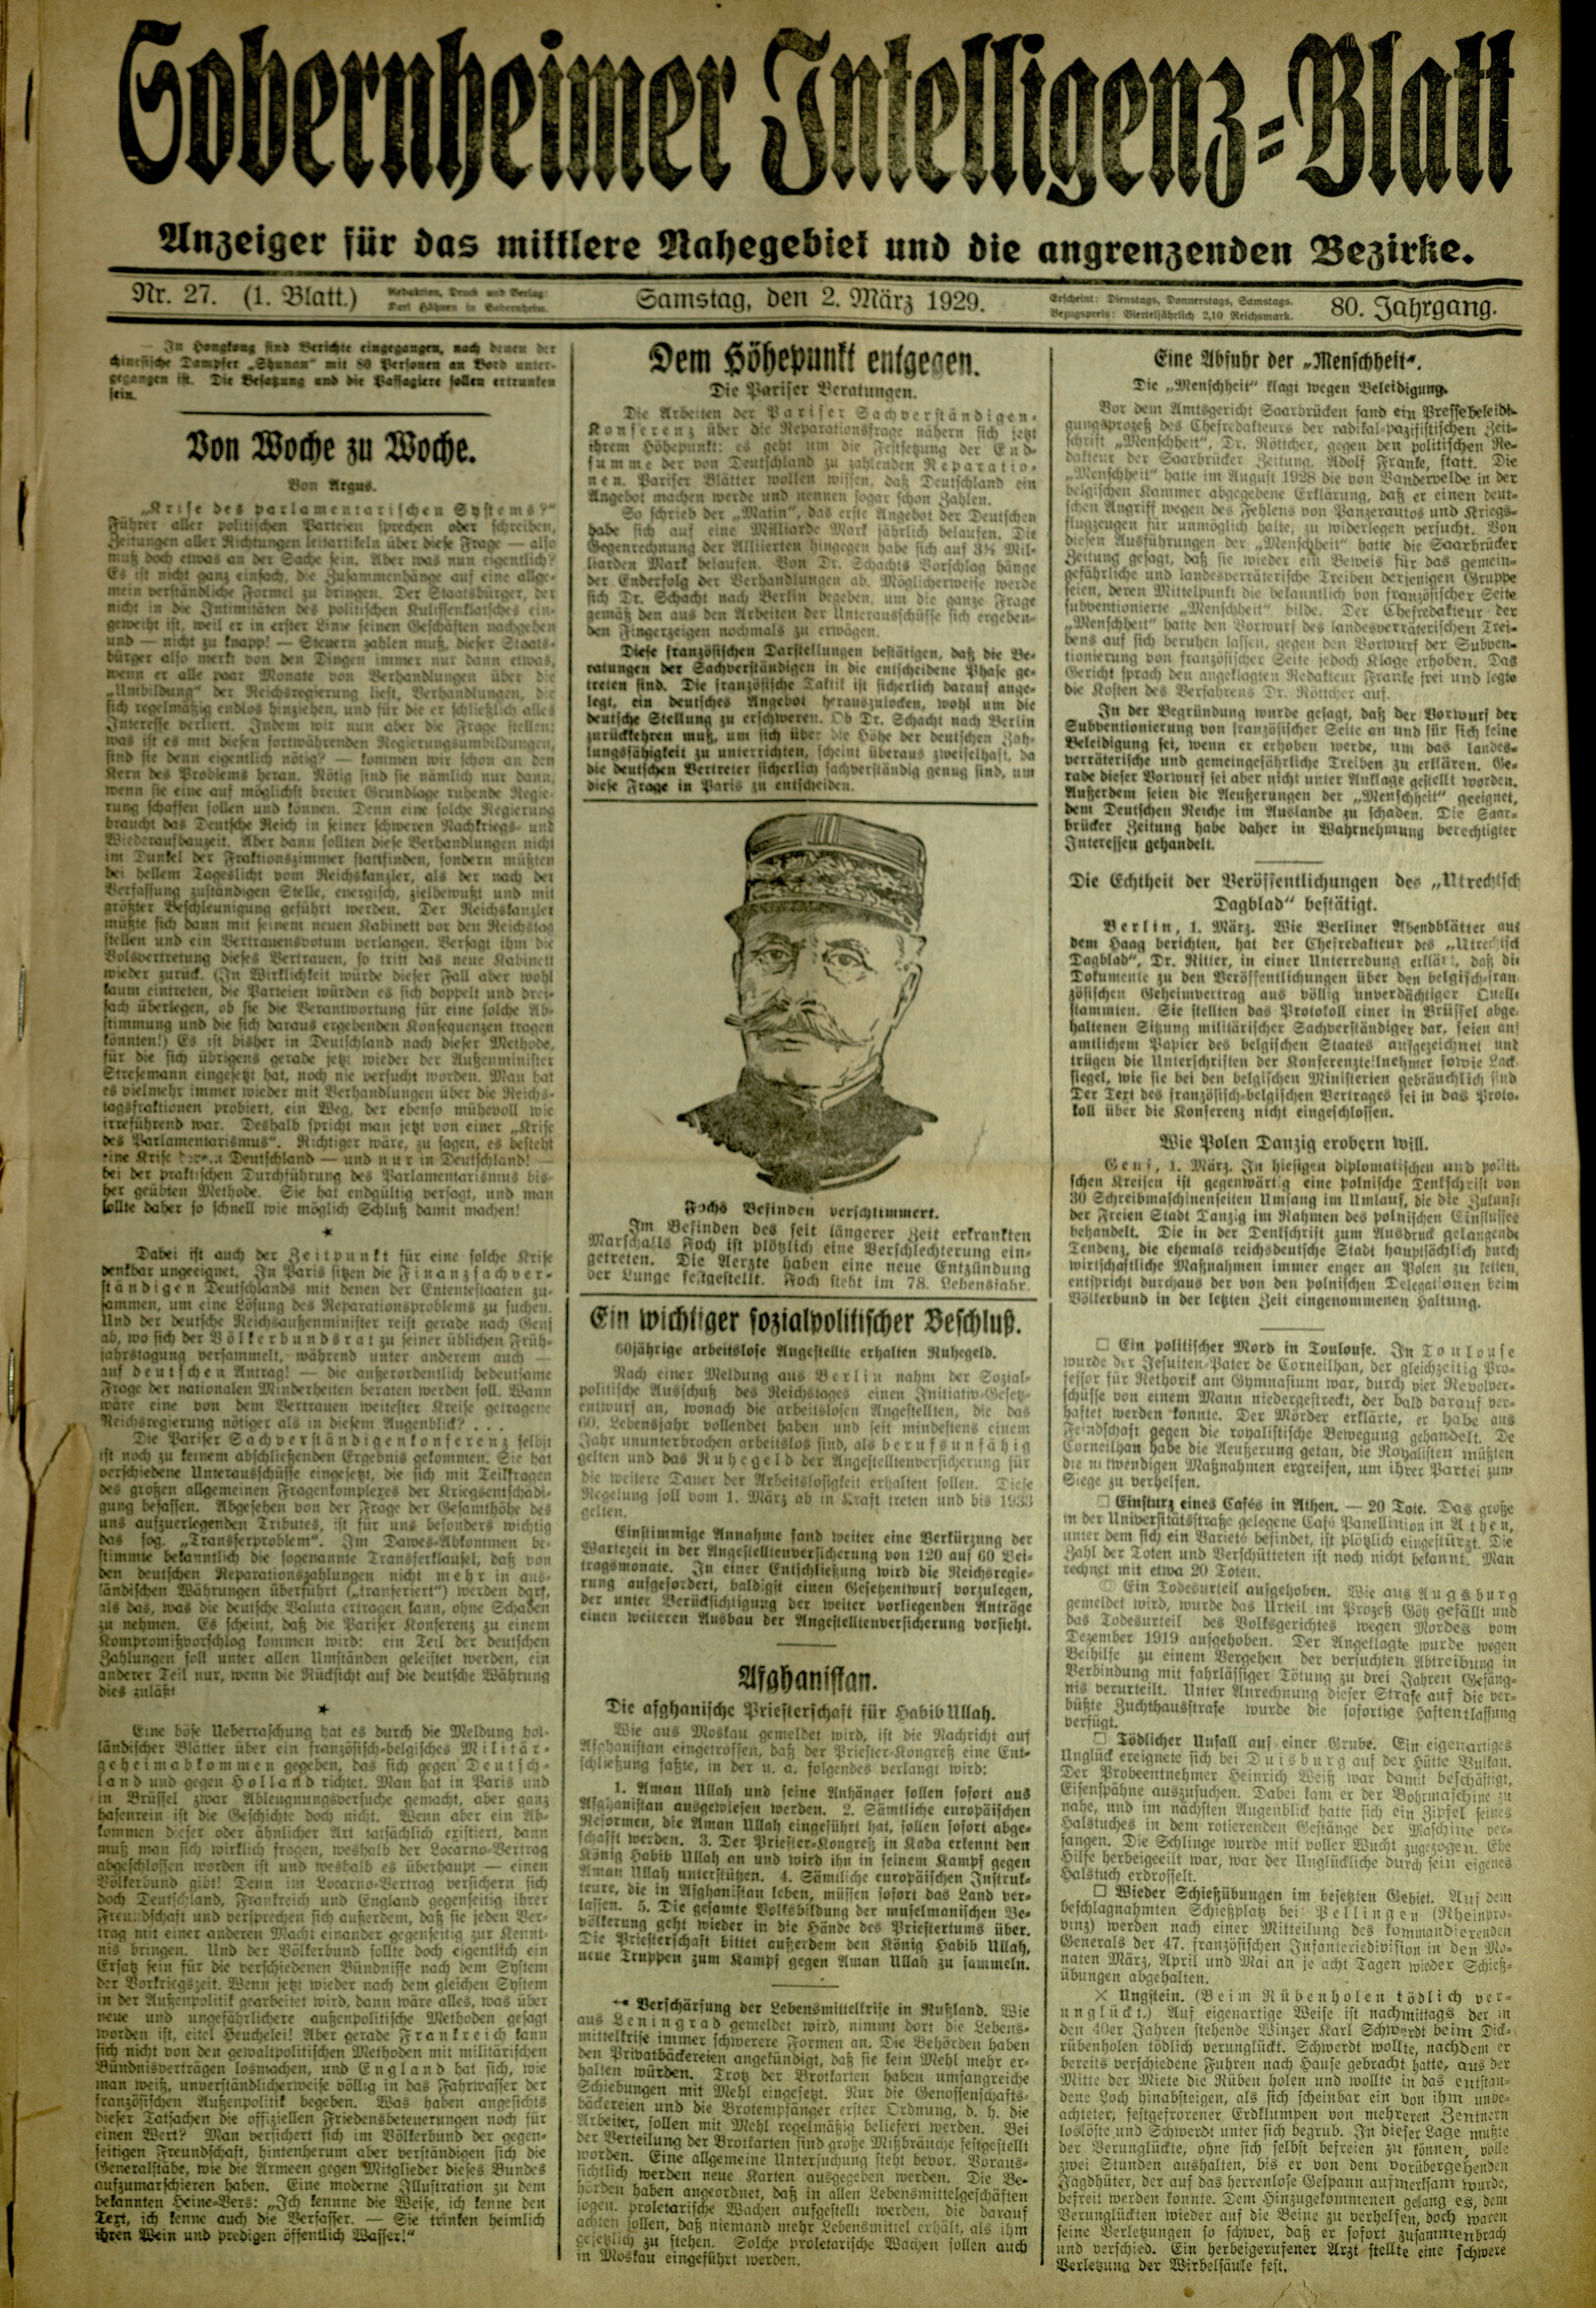 Zeitung: Sobernheimer Intelligenzblatt; März 1929, Jg. 80 Nr. 27 (Heimatmuseum Bad Sobernheim CC BY-NC-SA)